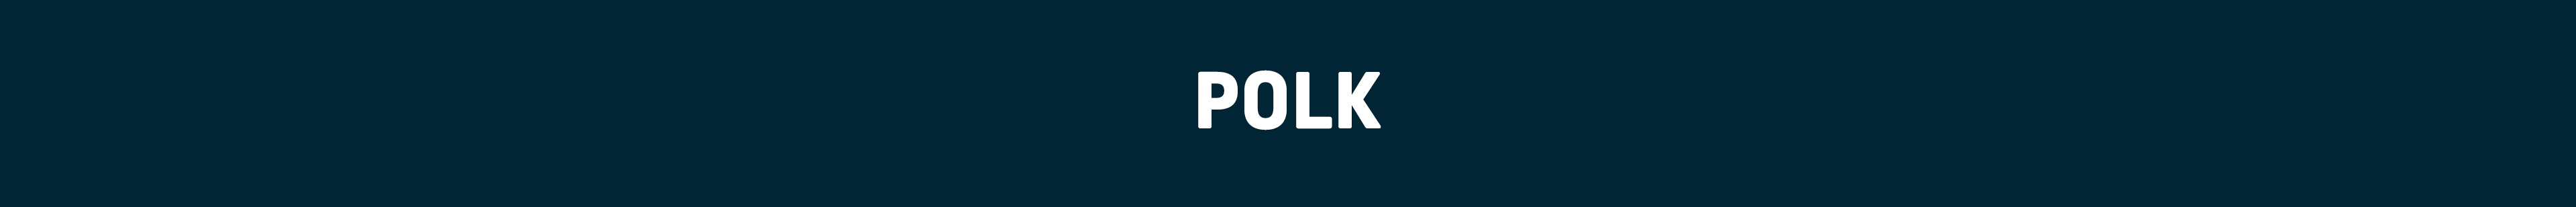 Polk.jpg